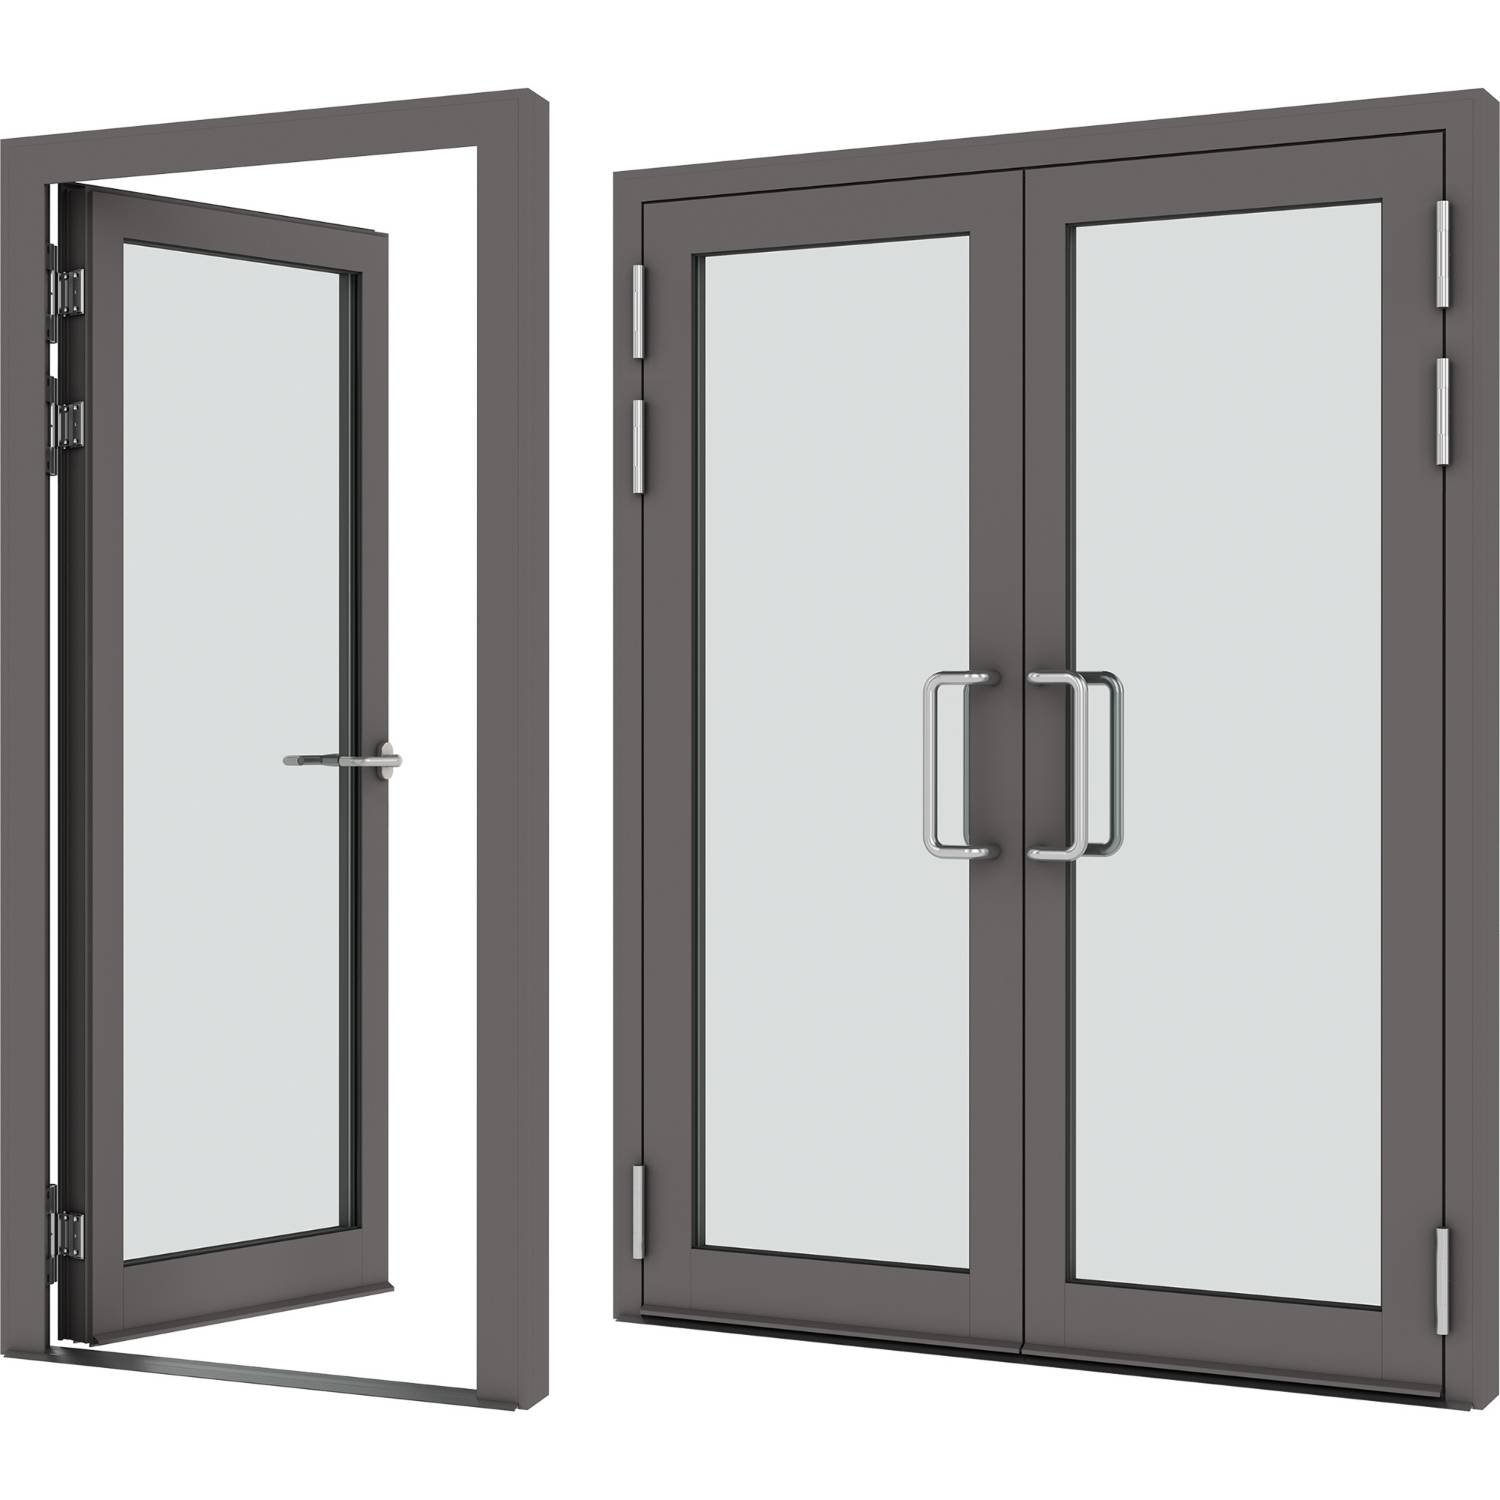 VELFAC Aluminium Door - Glazed Entrance Door for Heavy Use